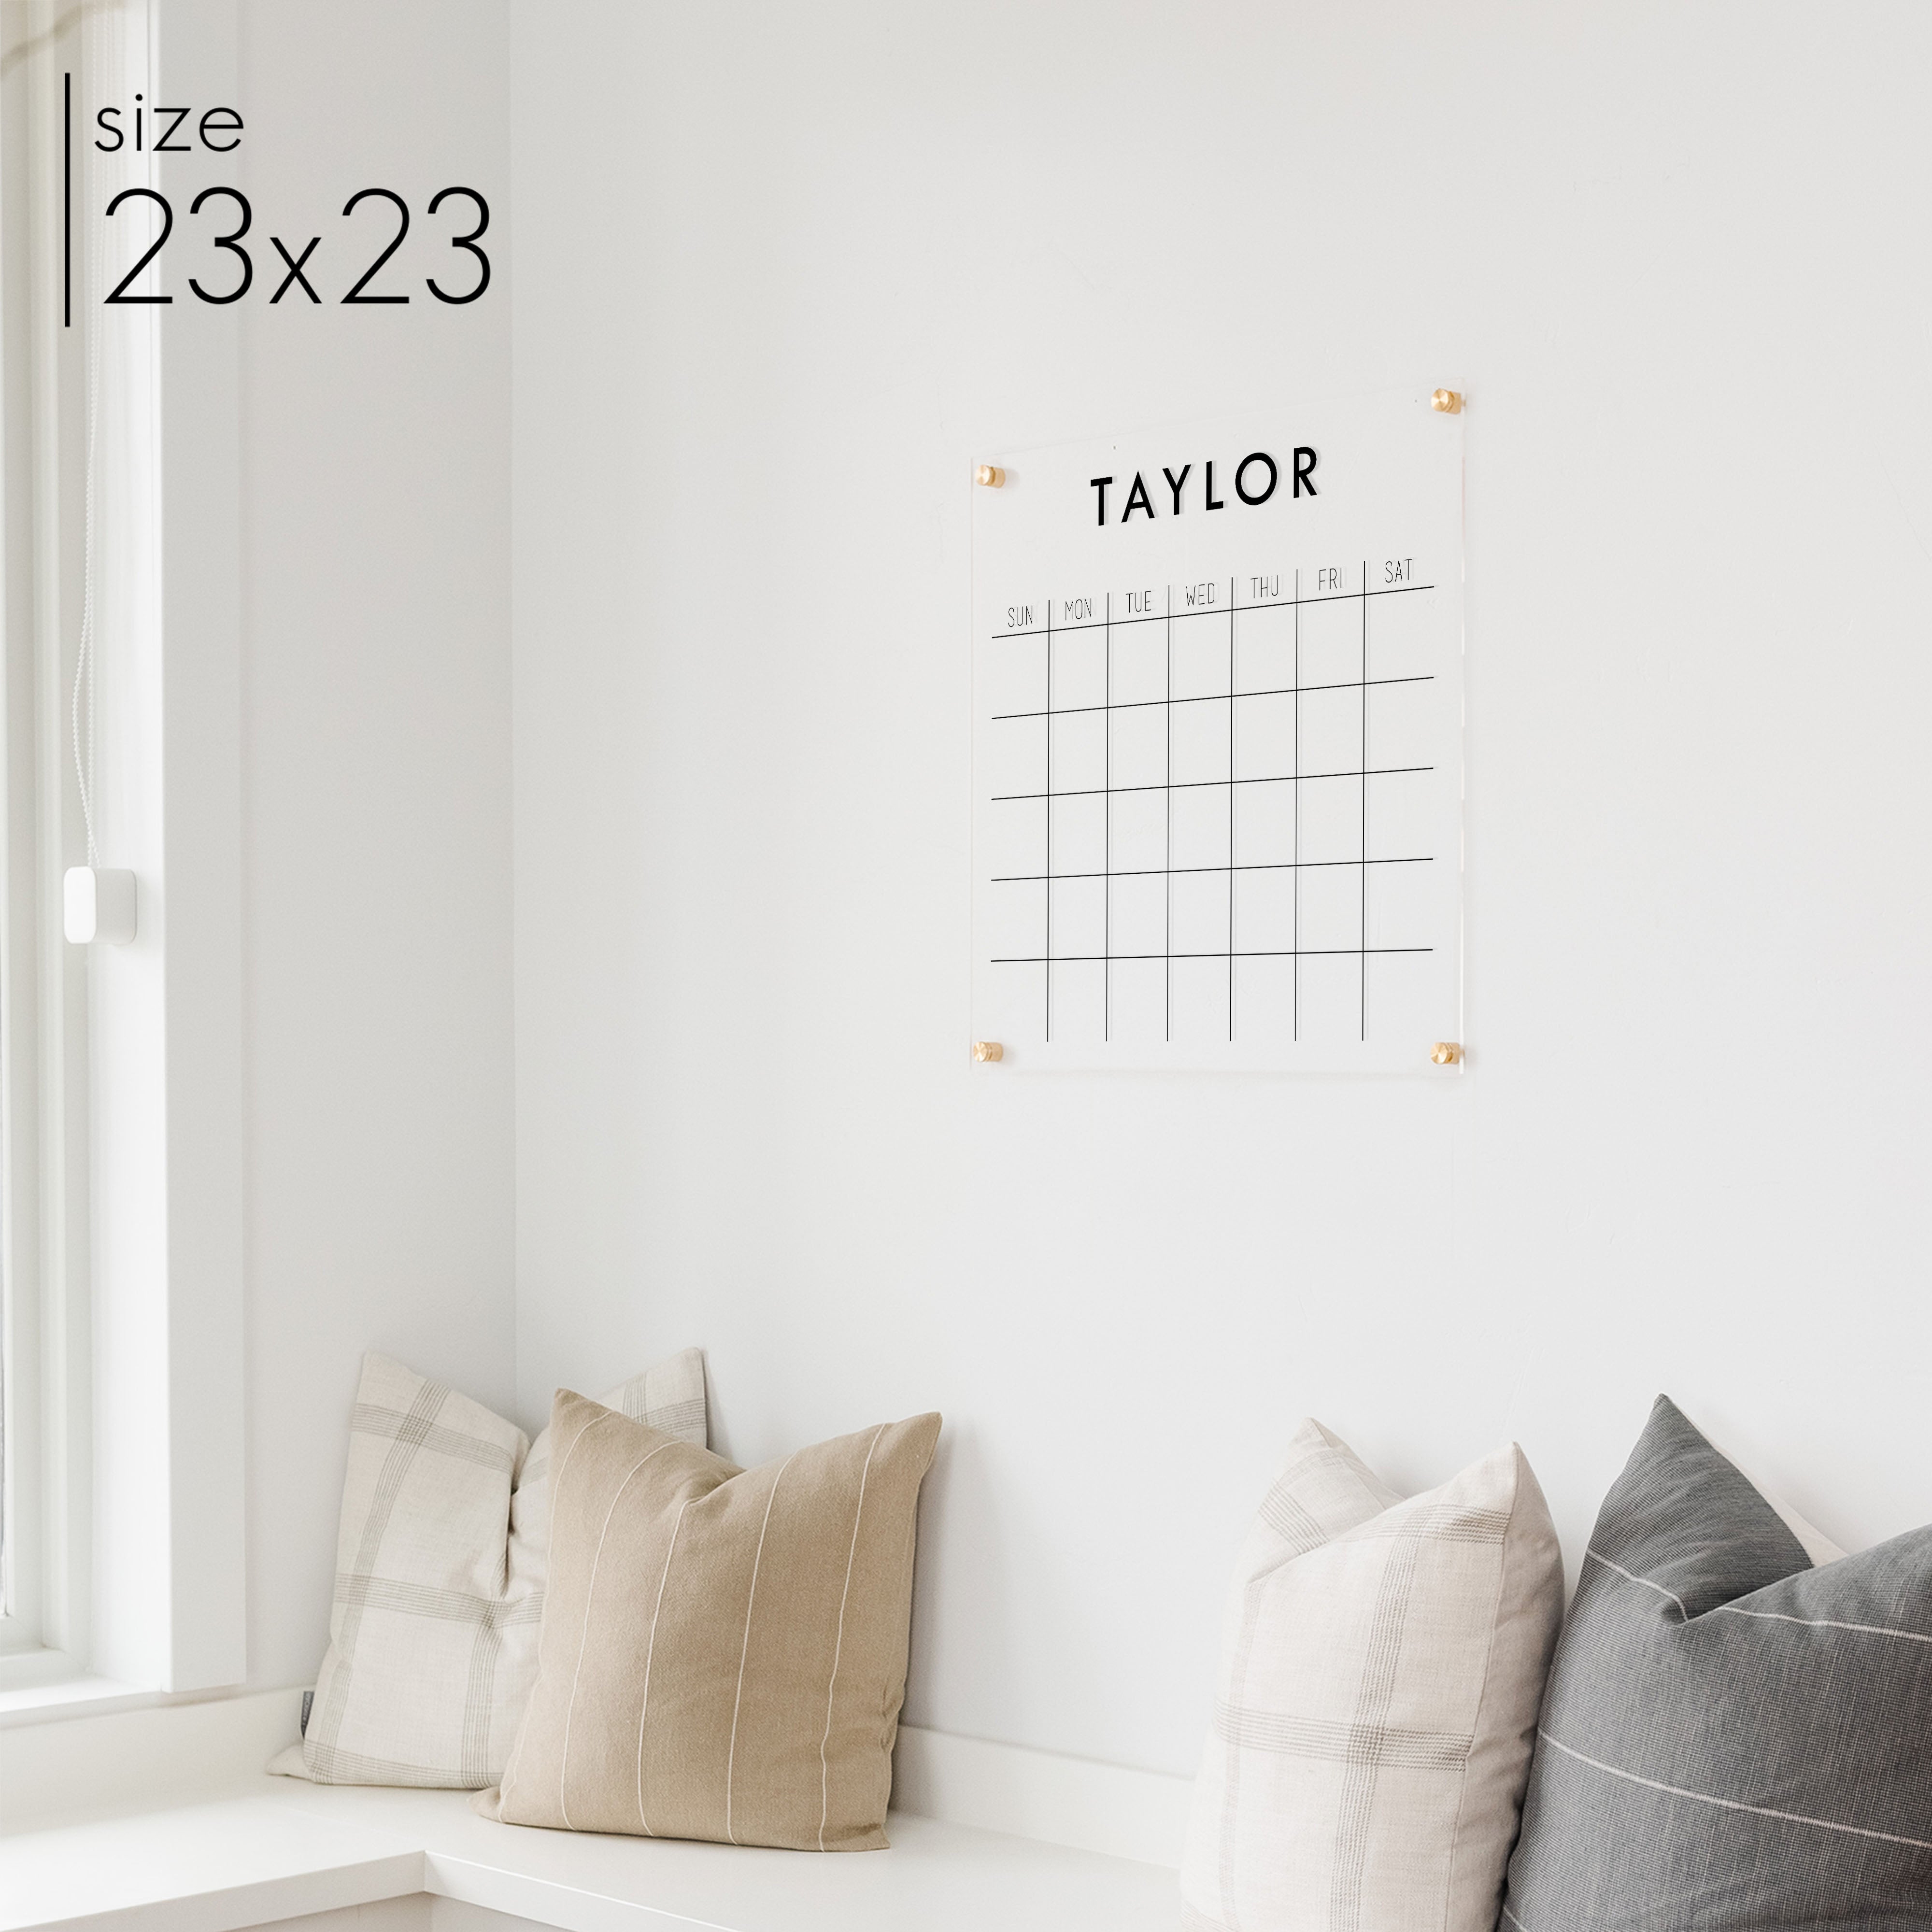 Monthly Acrylic Calendar | Horizontal Madi